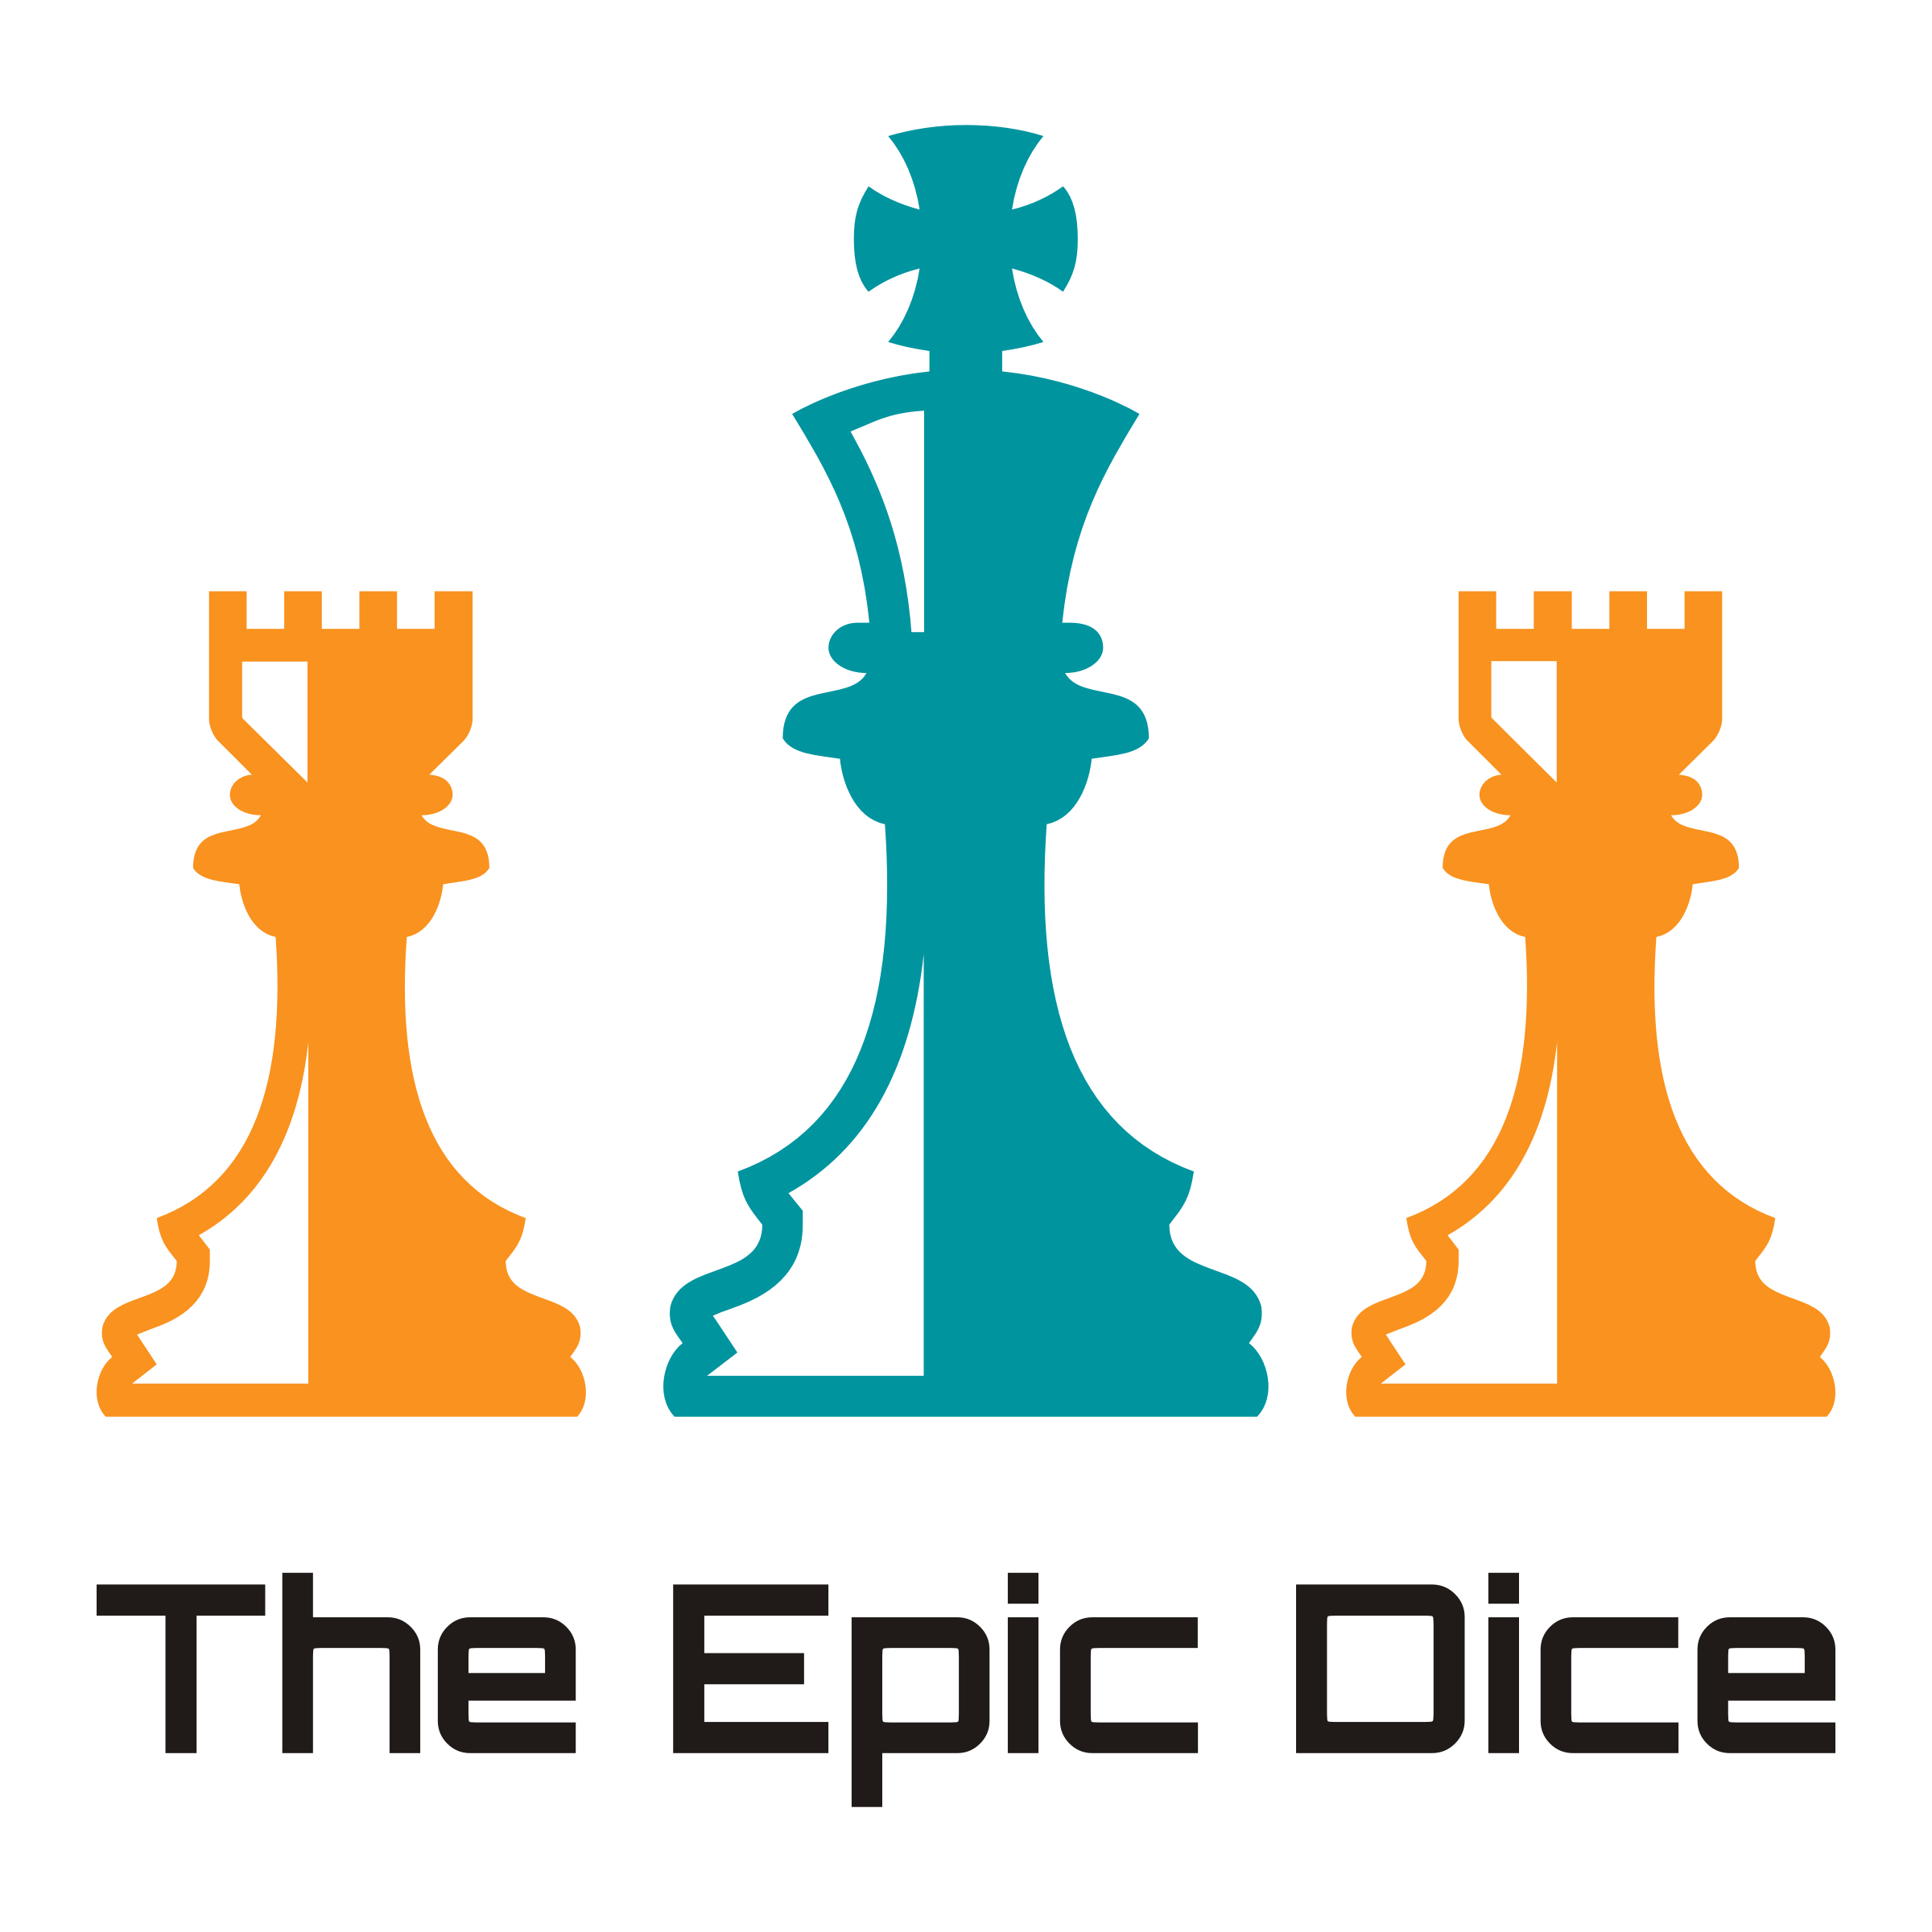 board game logo